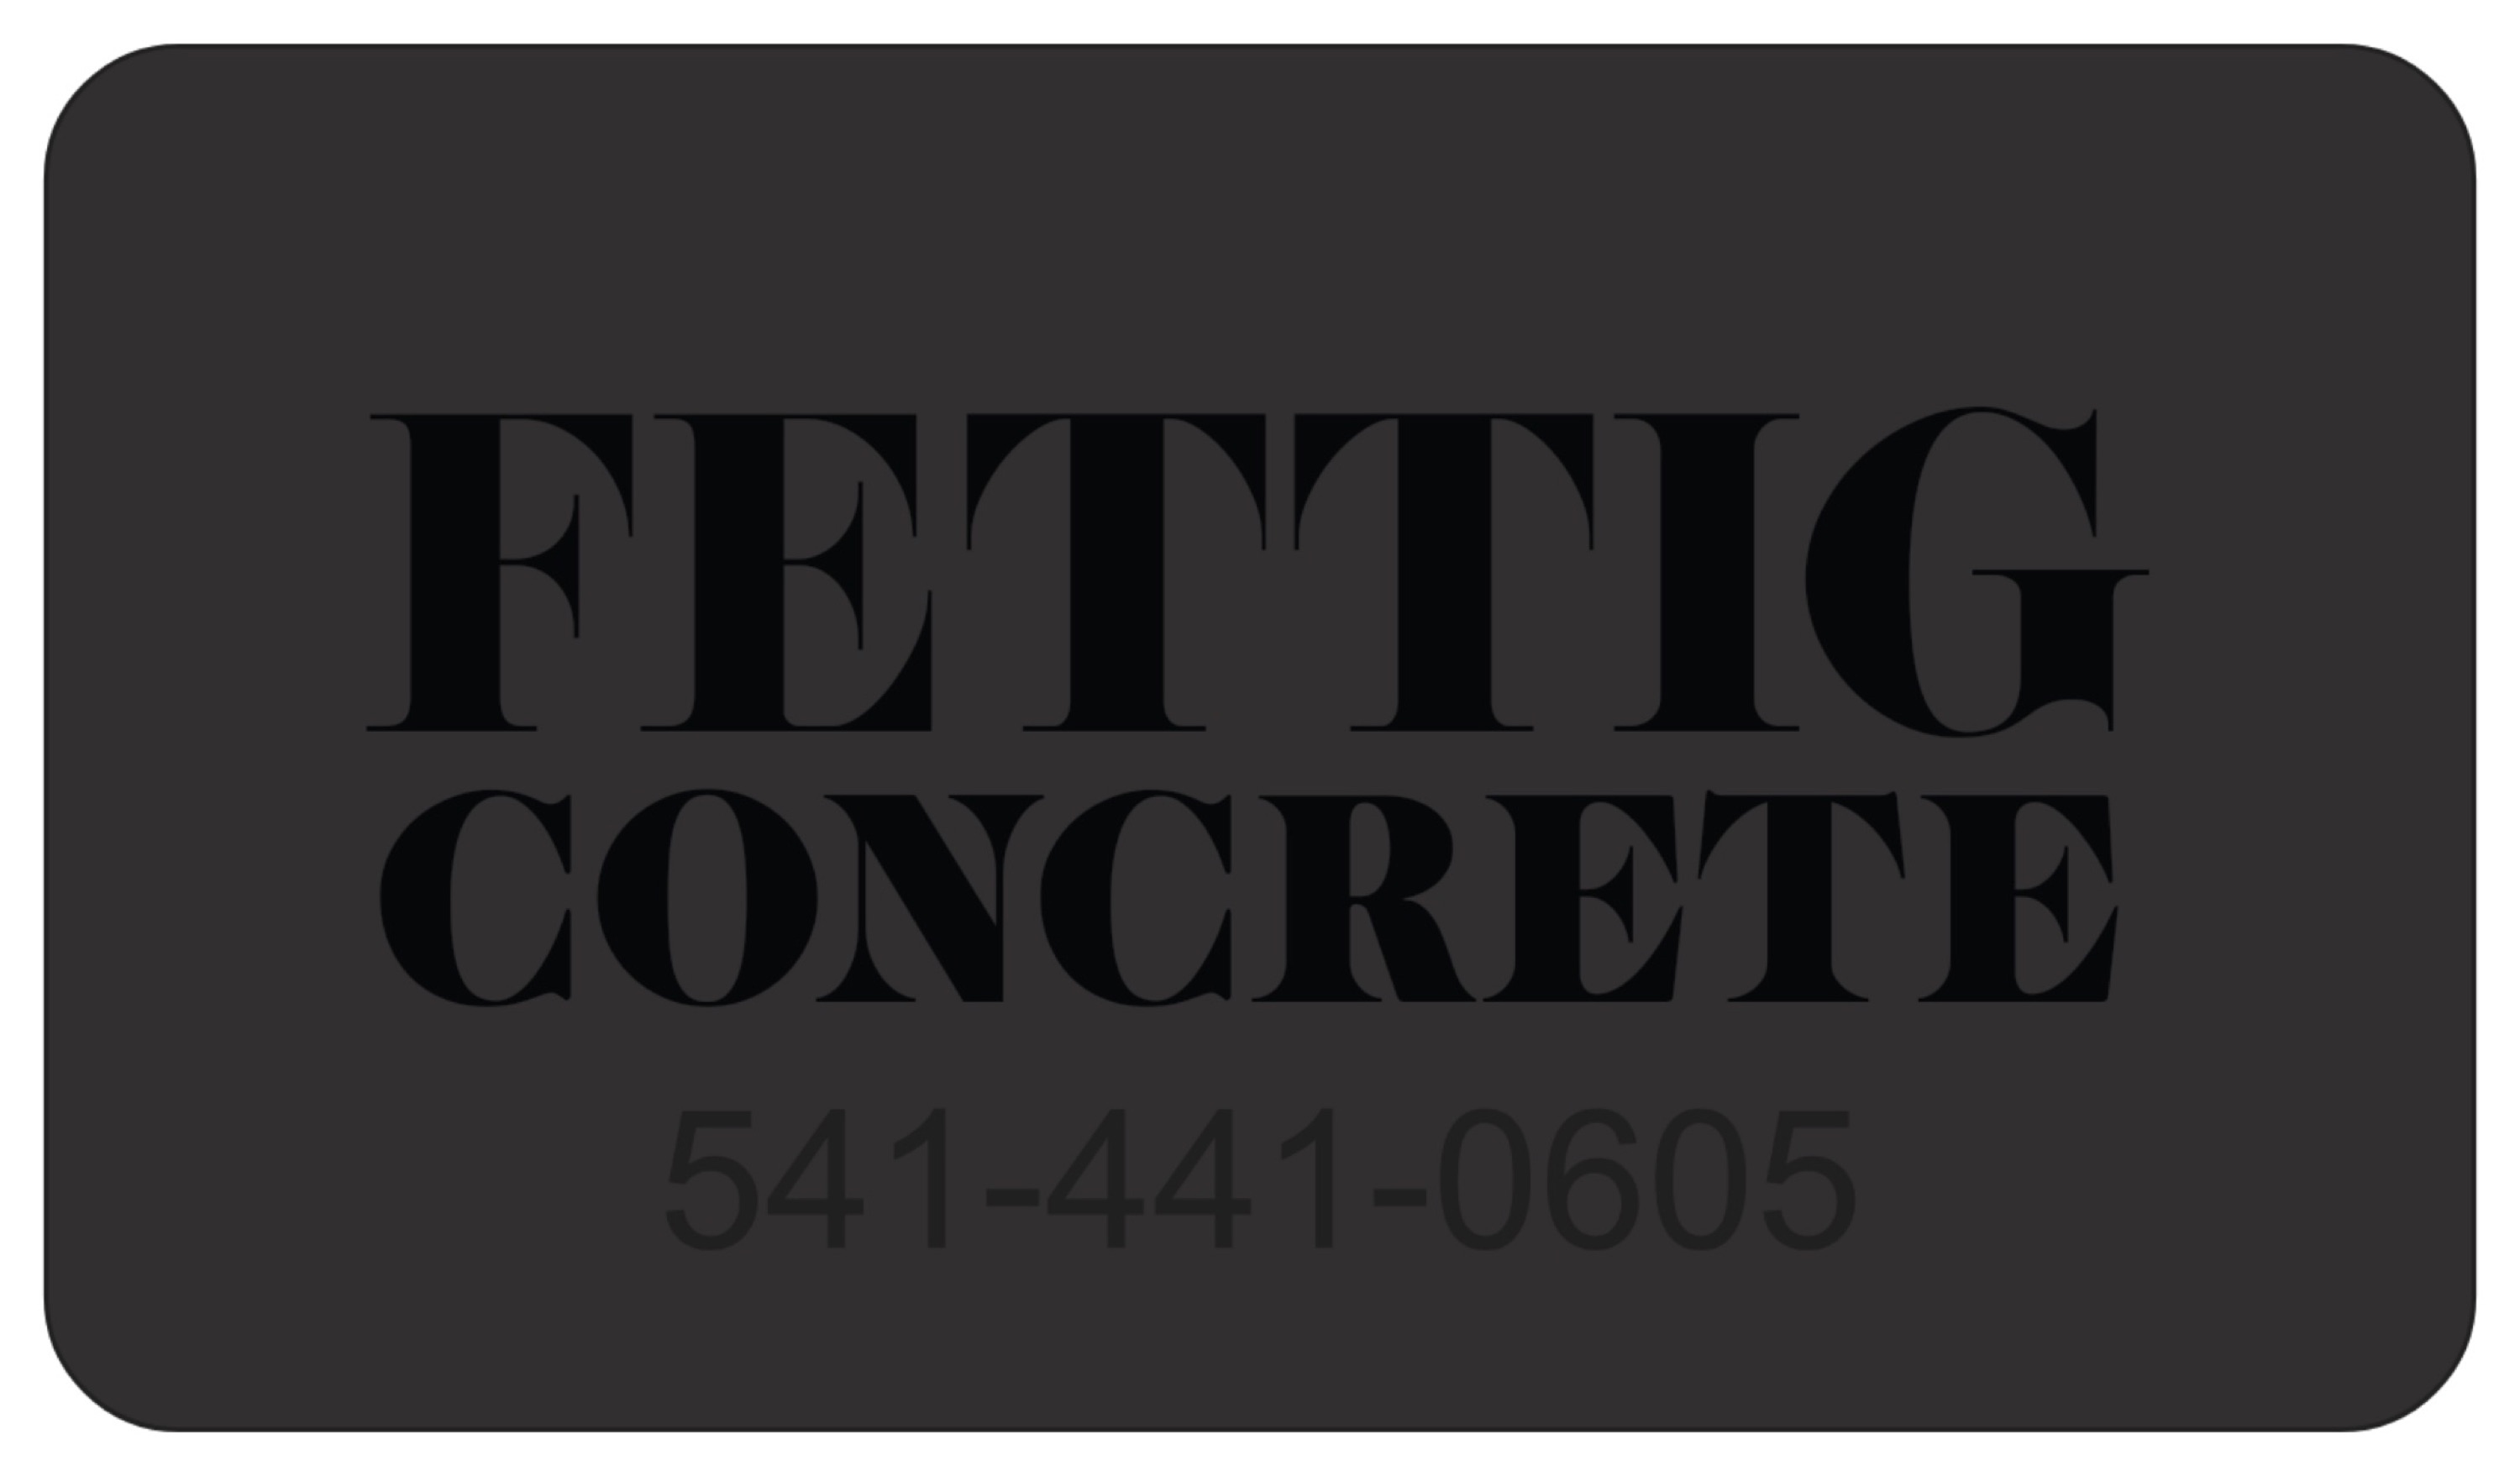 Fettig Concrete Logo